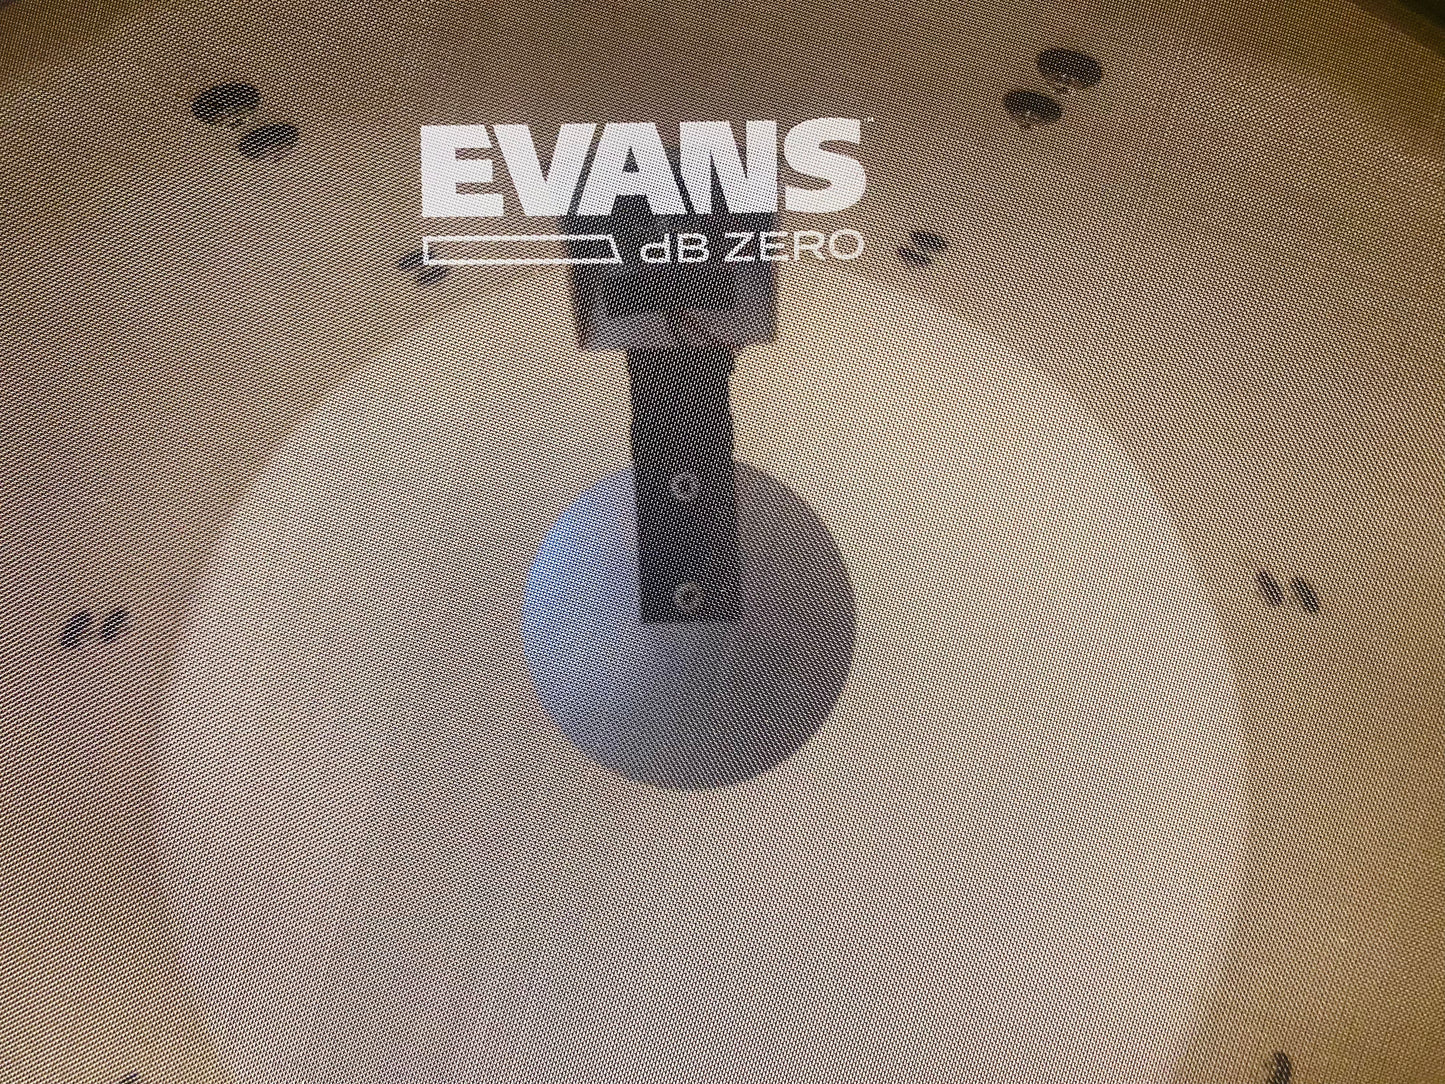 20” Black Sparkle Bass Kick Drum Trigger Pad for Roland Alesis Evans Head